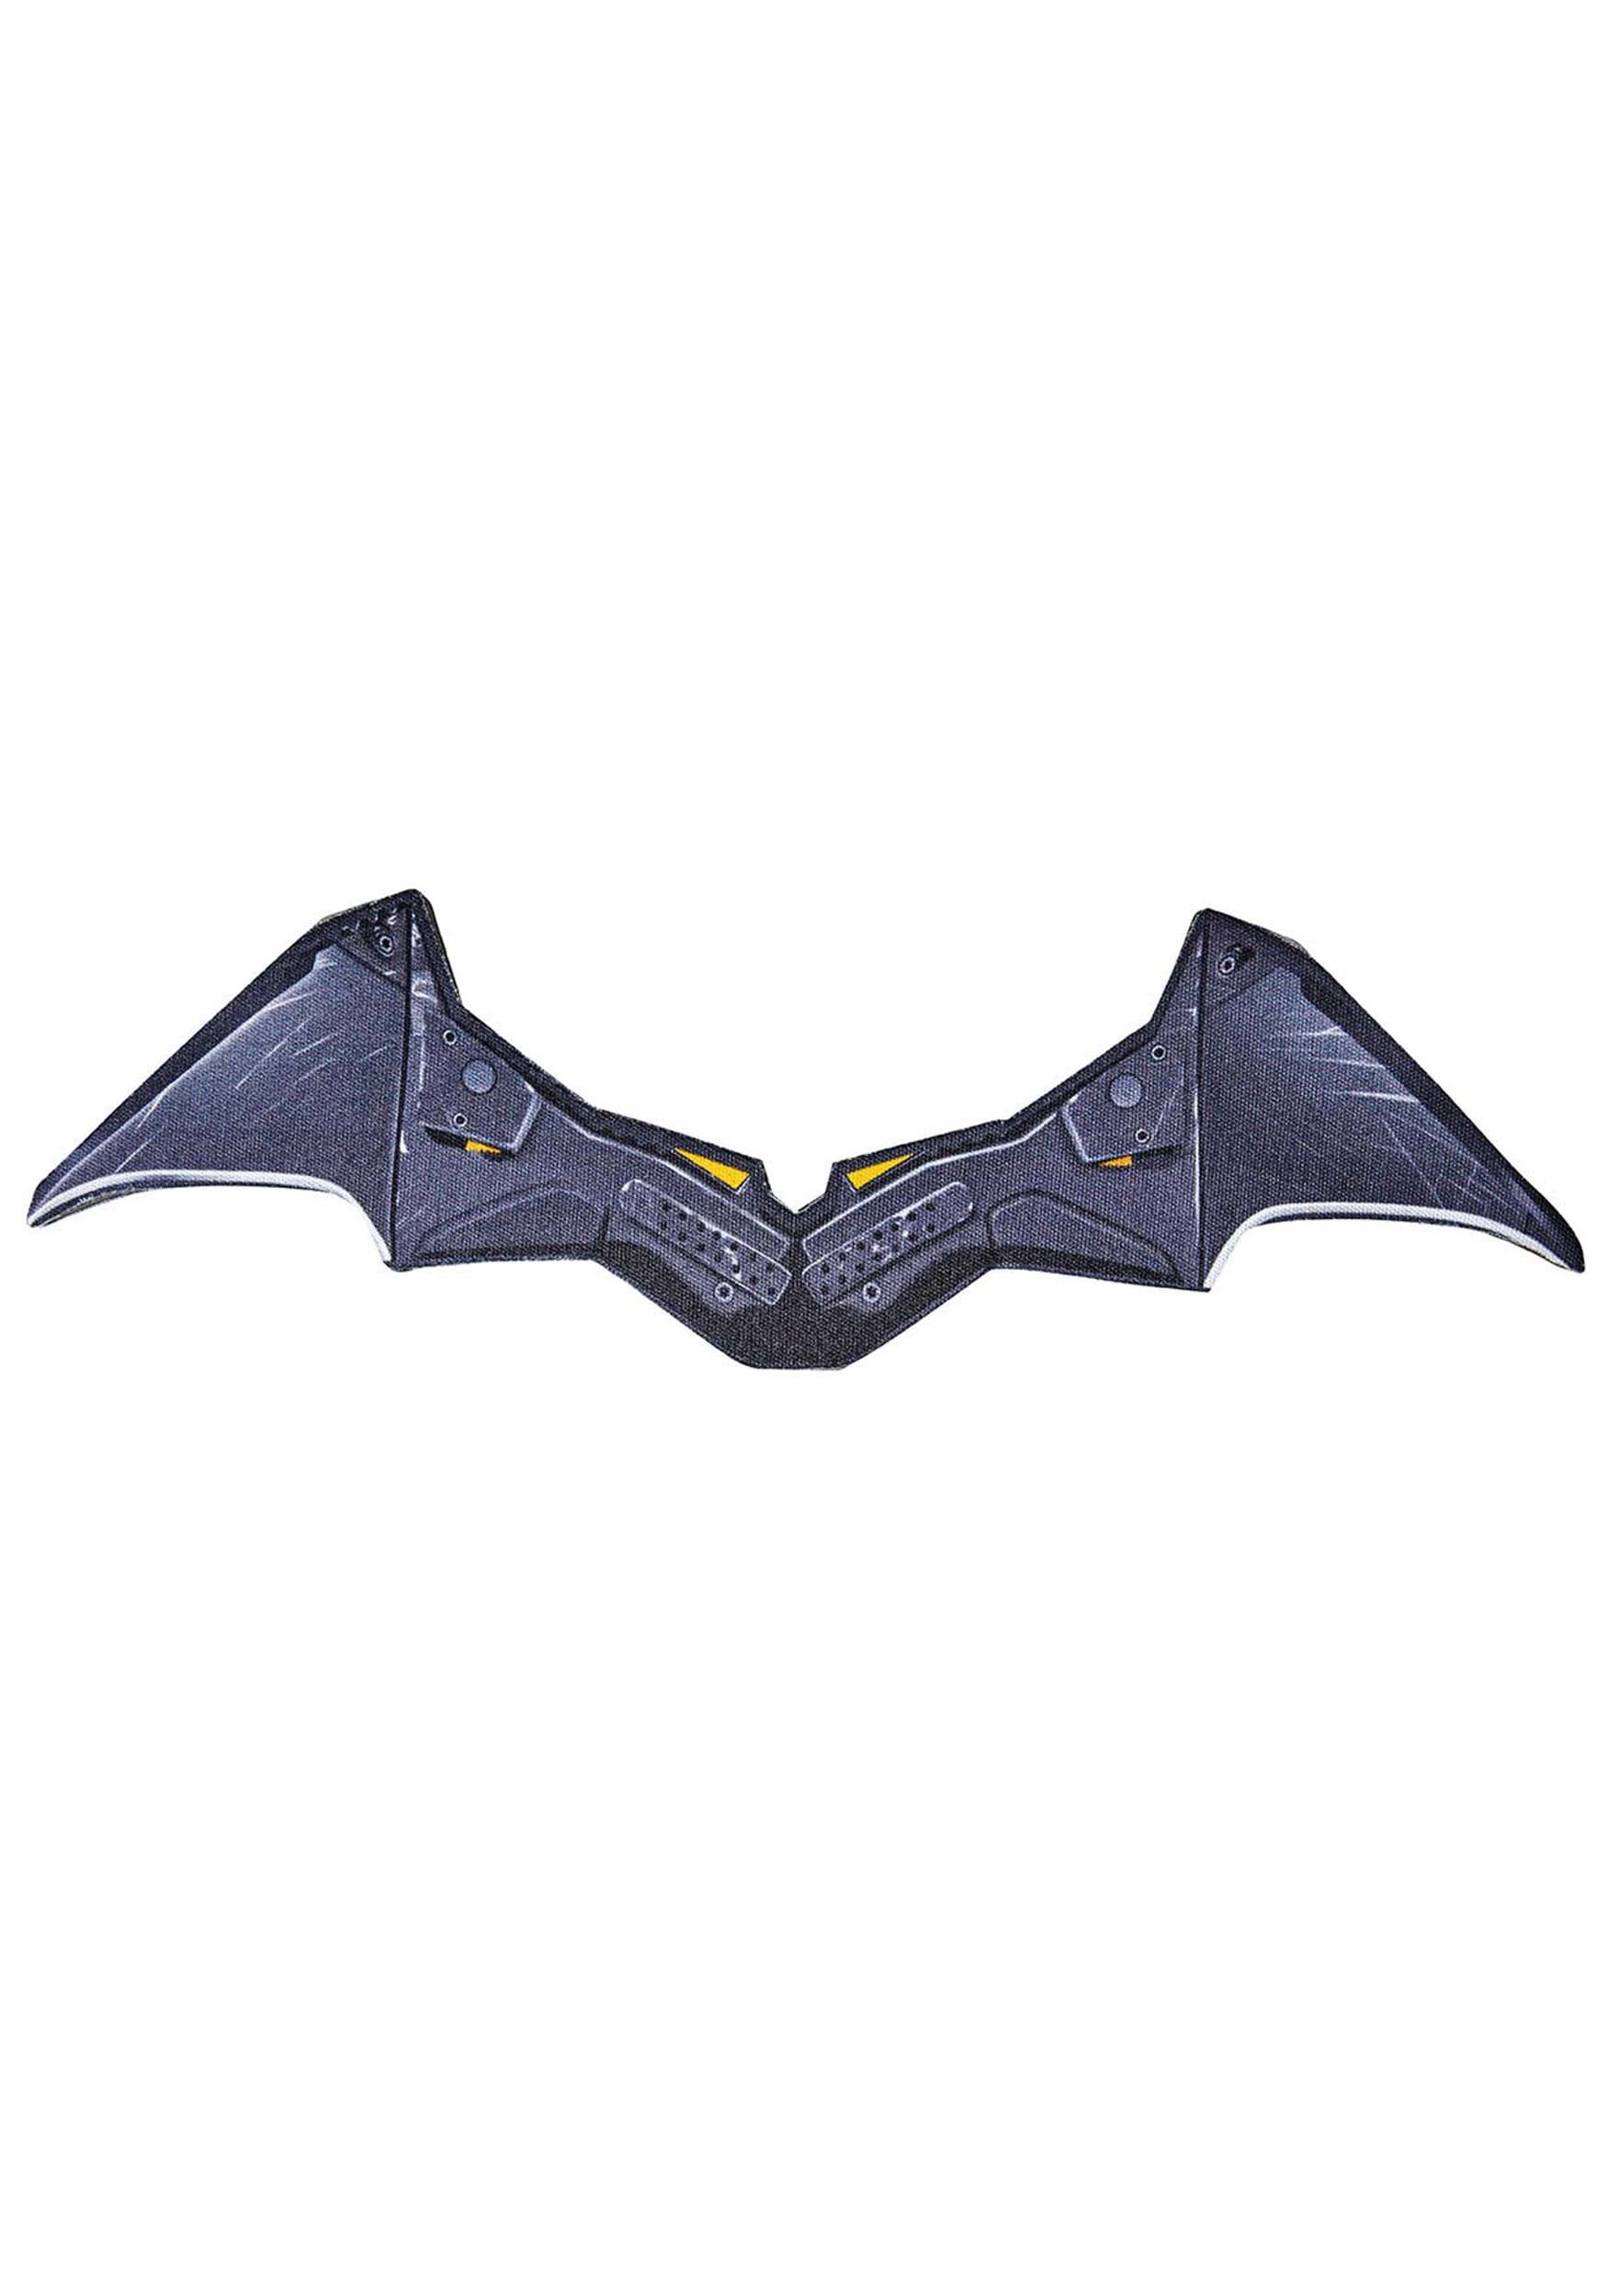 The Batman: Batman Accessory Bat Club 